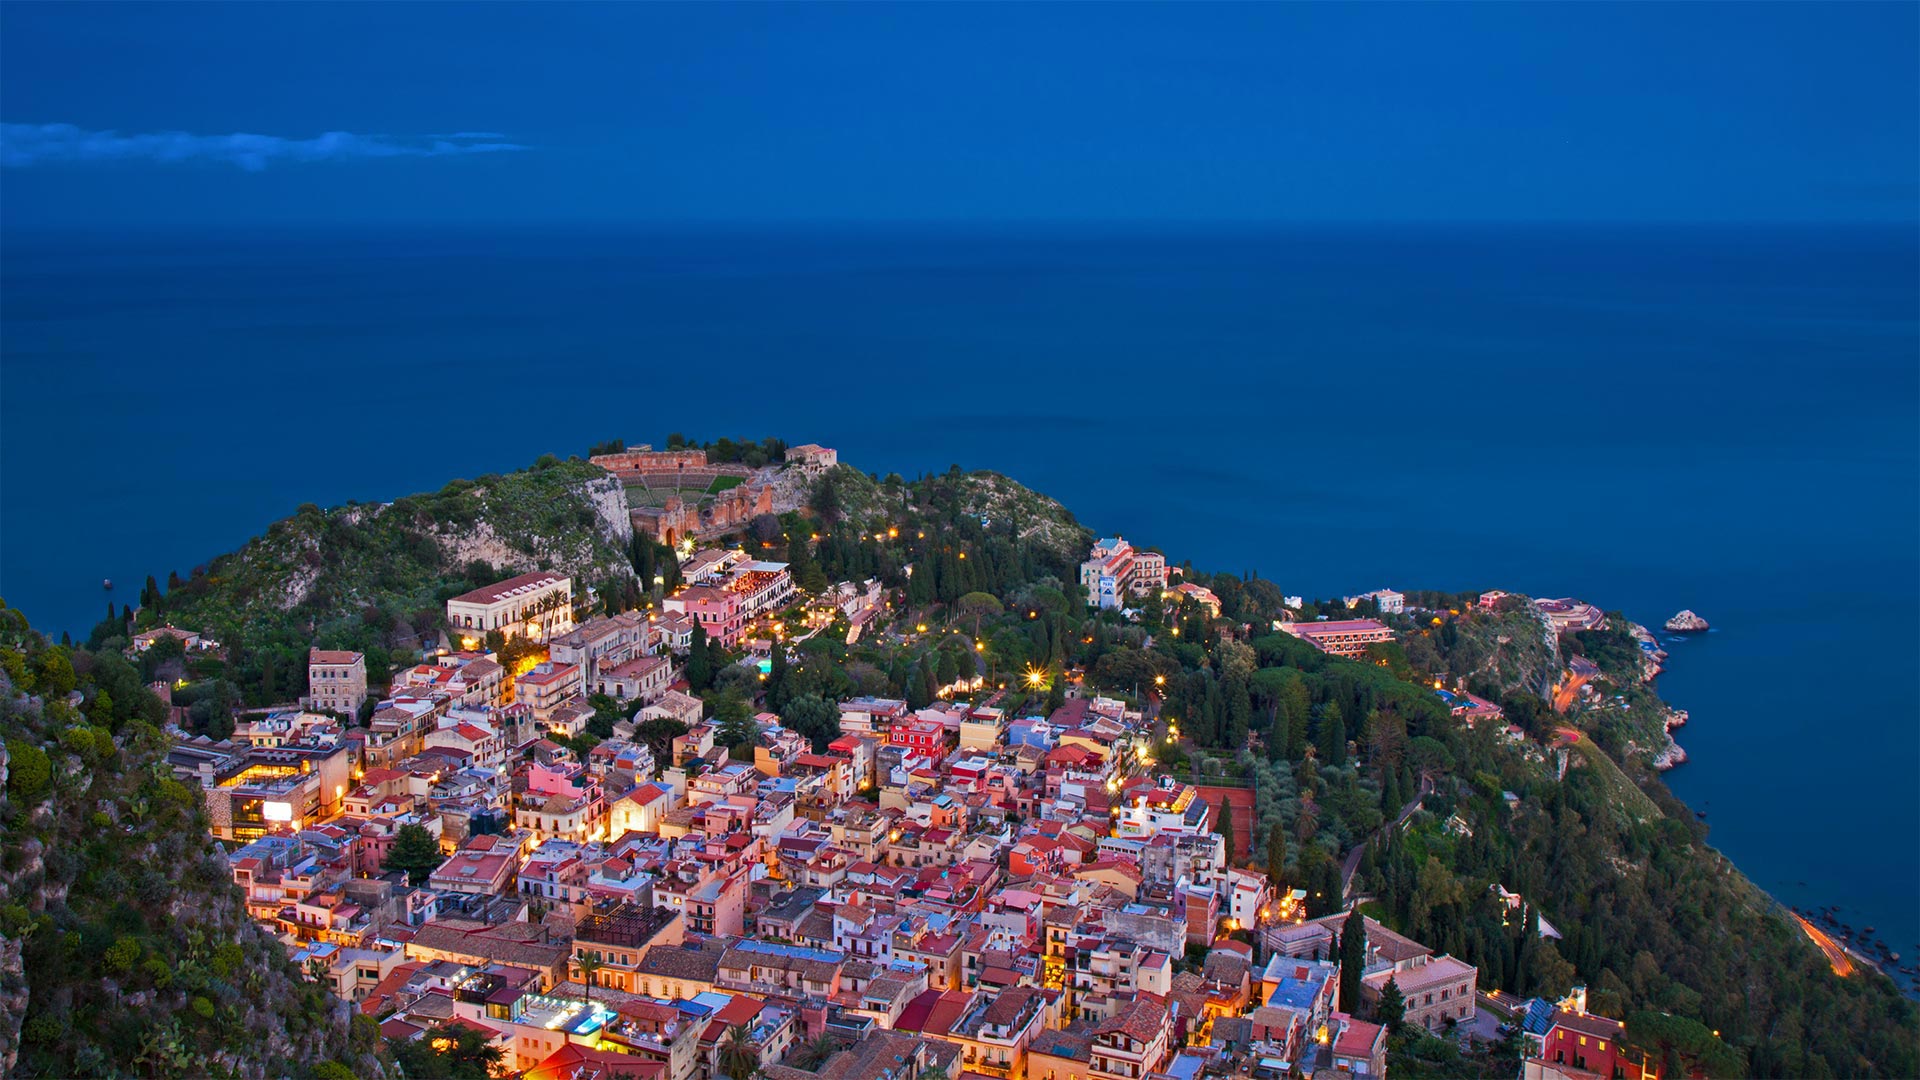 Taormina, Sicily, Italy - Juergen Schonnop/Getty Images)